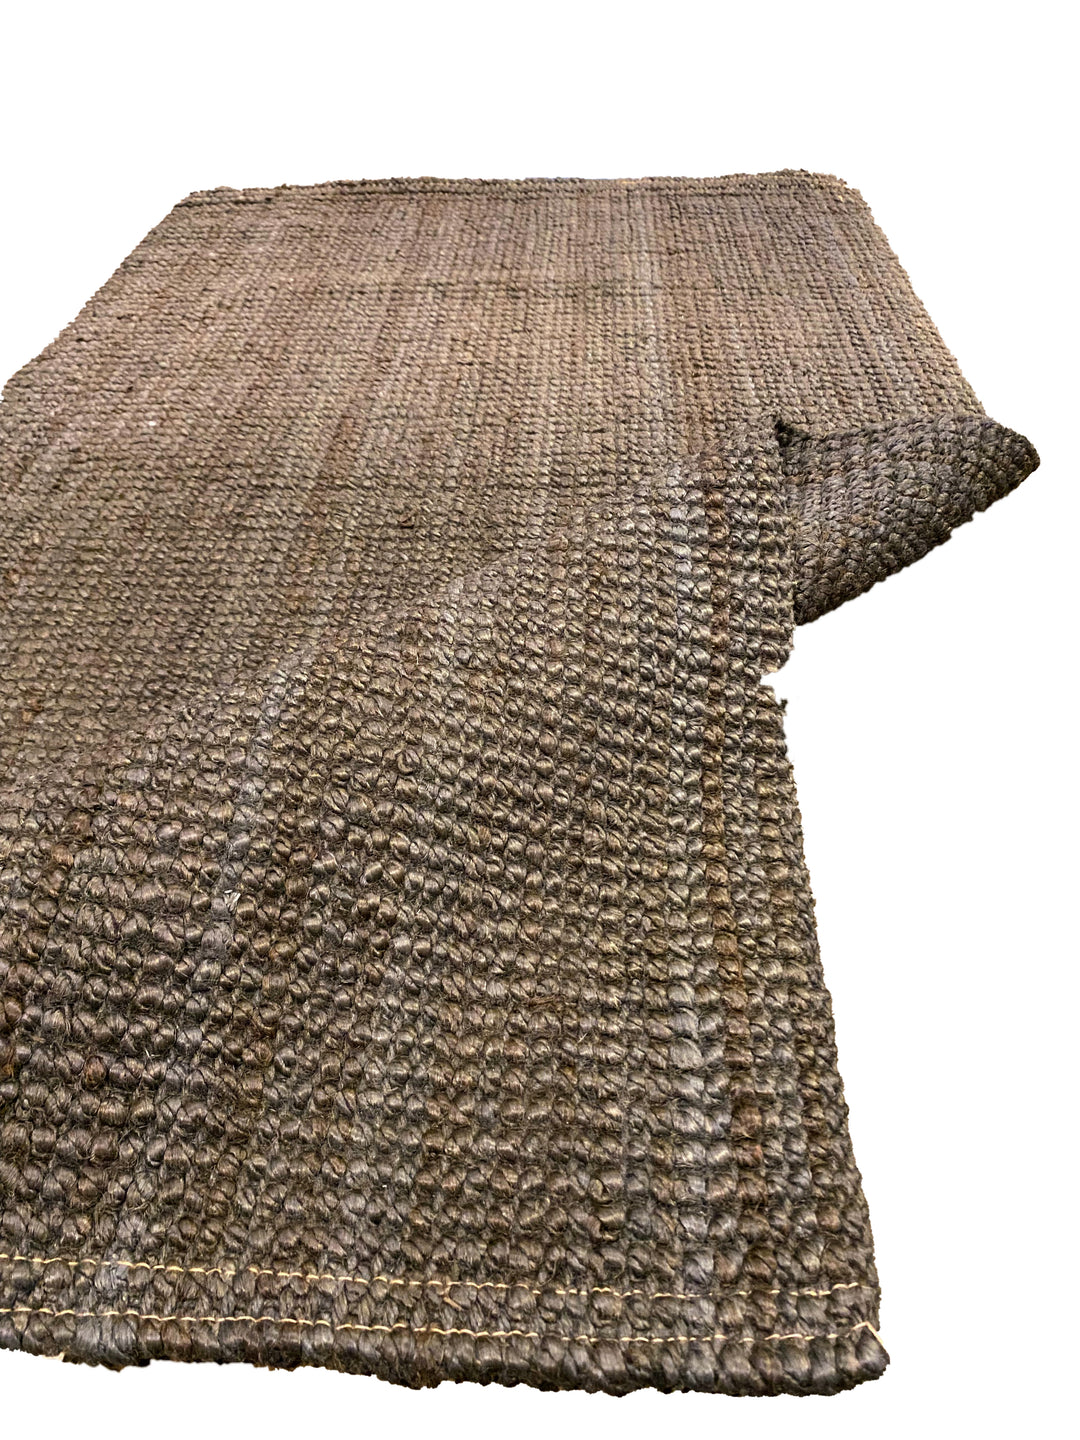 Adah - Size: 5 x 2.6 - Imam Carpet Co